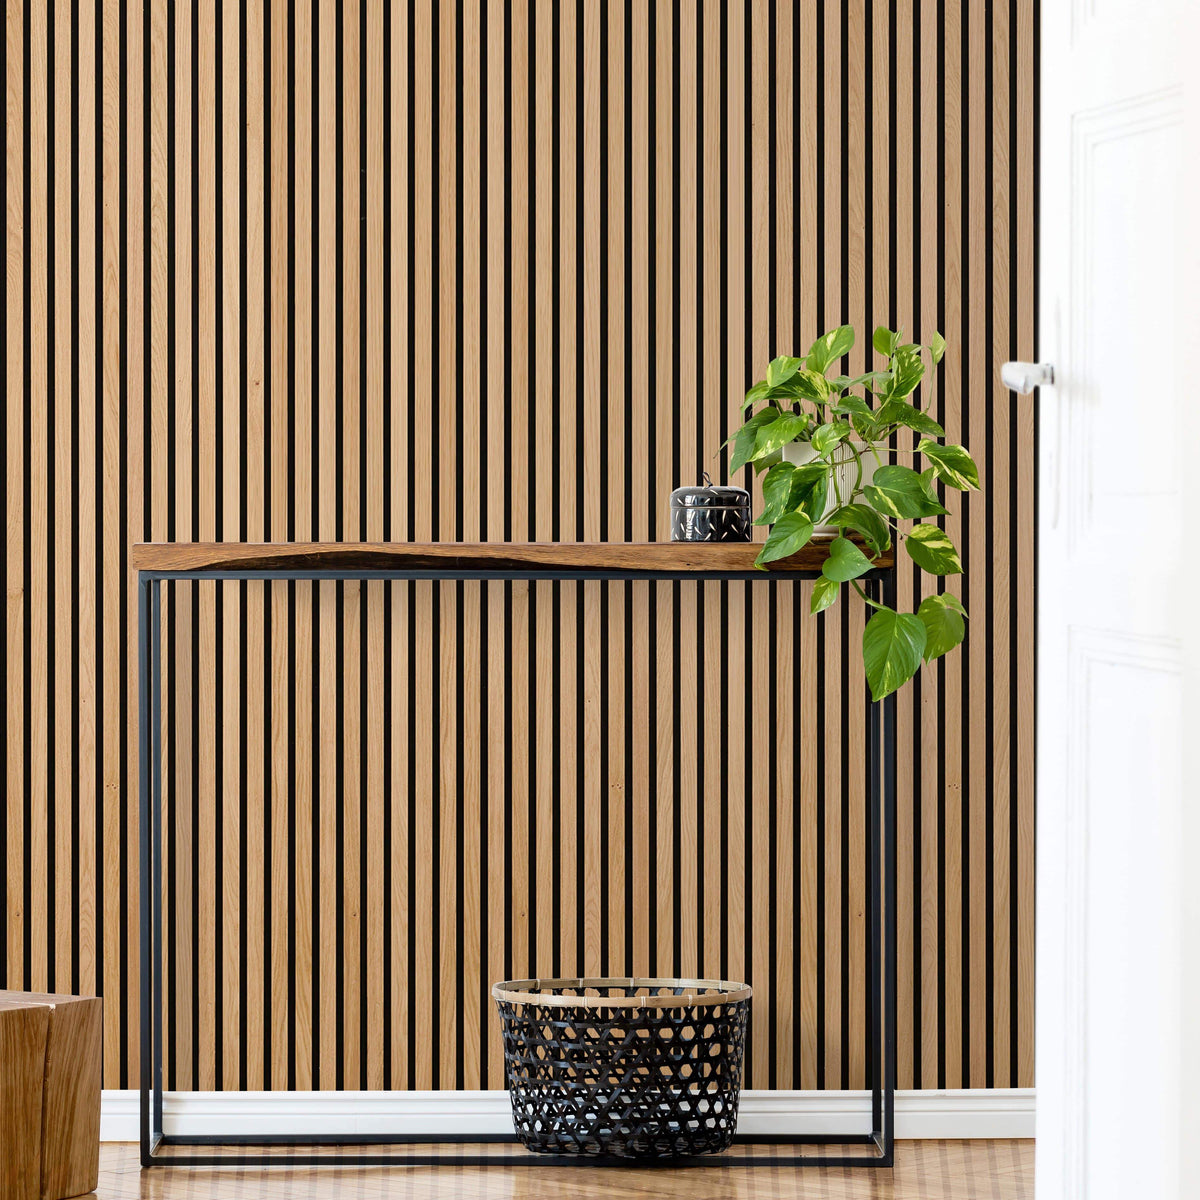 Luxury American Oak Acoustic Slat Wood Wall Panels | Original Slatpanel